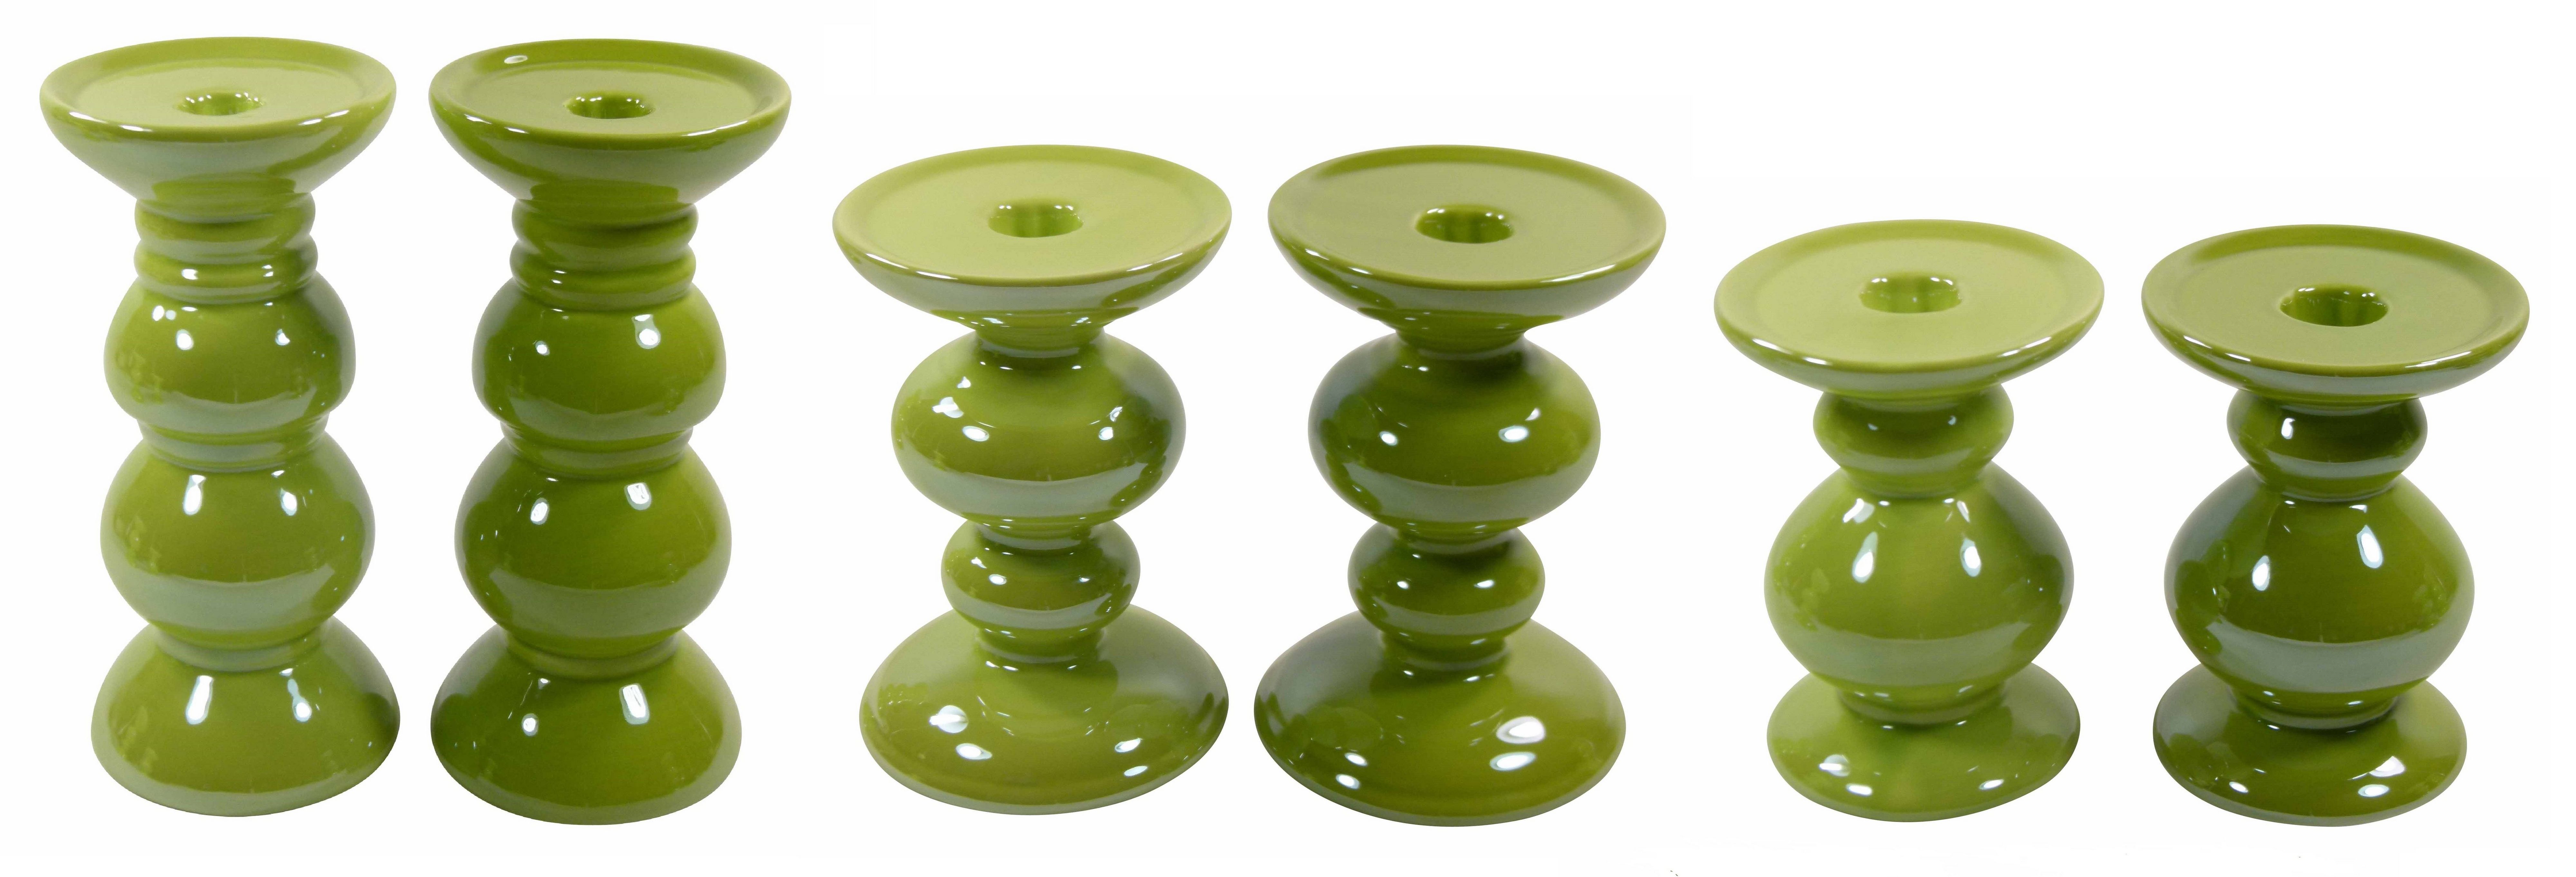 GlasArt Kerzenhalter 2er Set Keramik-Kerzenhalter Säulenform drei Größen 12cm-20cm, hell- und dunkelgrün, Sommer Frühling (Dekoset, 2 St., 2er-Set), Aus Keramik